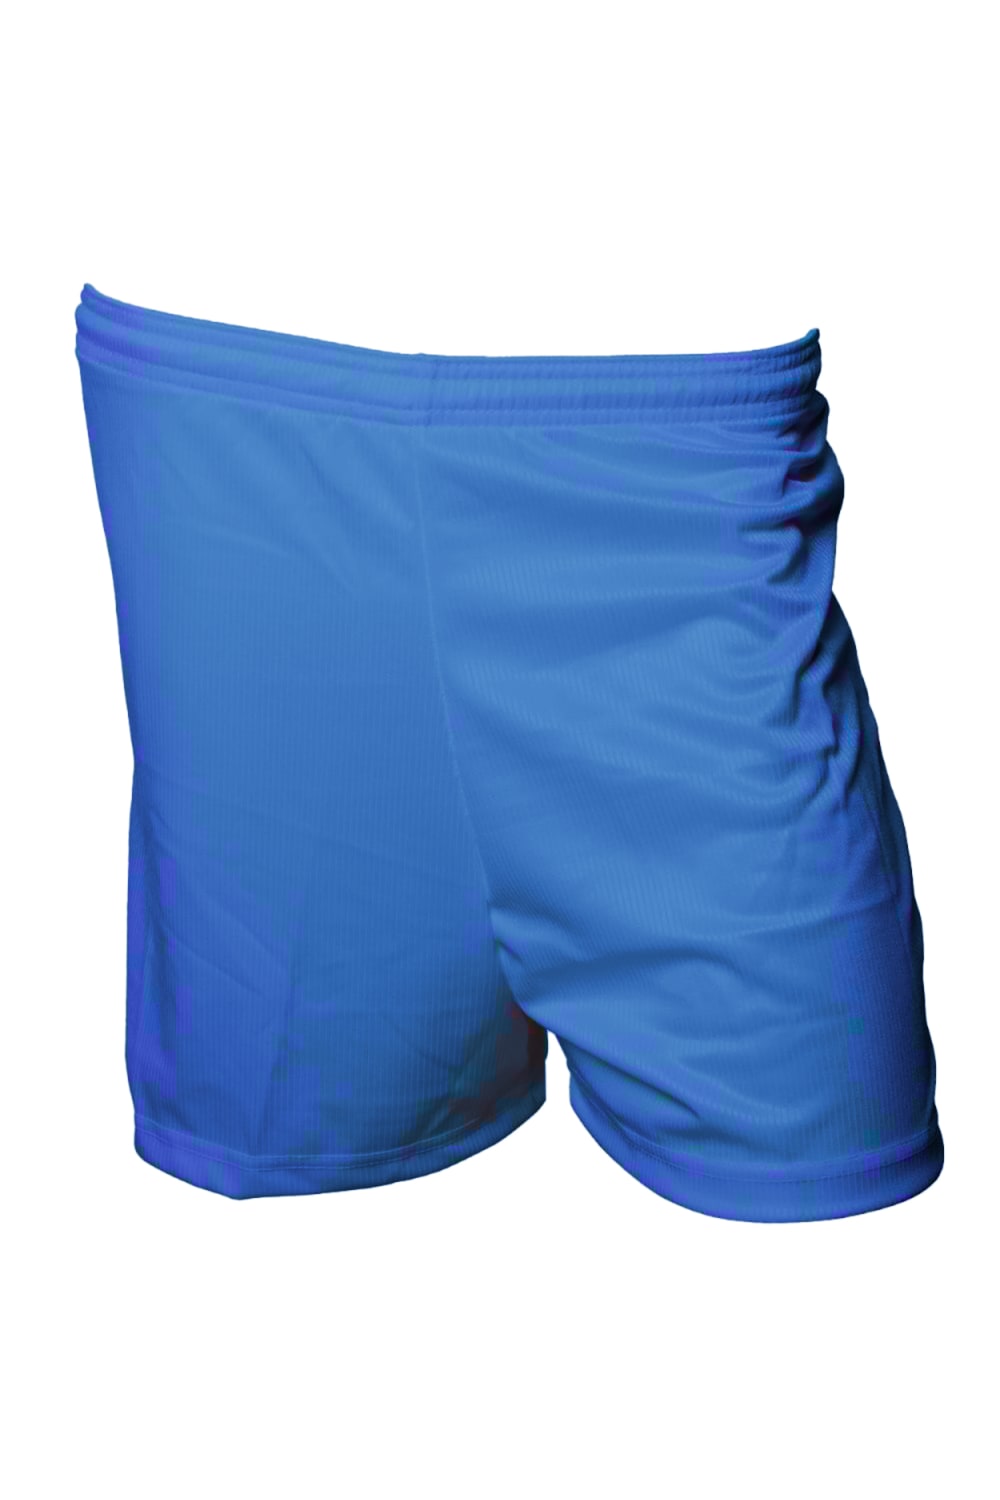 Precision Unisex Adult Micro-Stripe Football Shorts (Royal Blue)